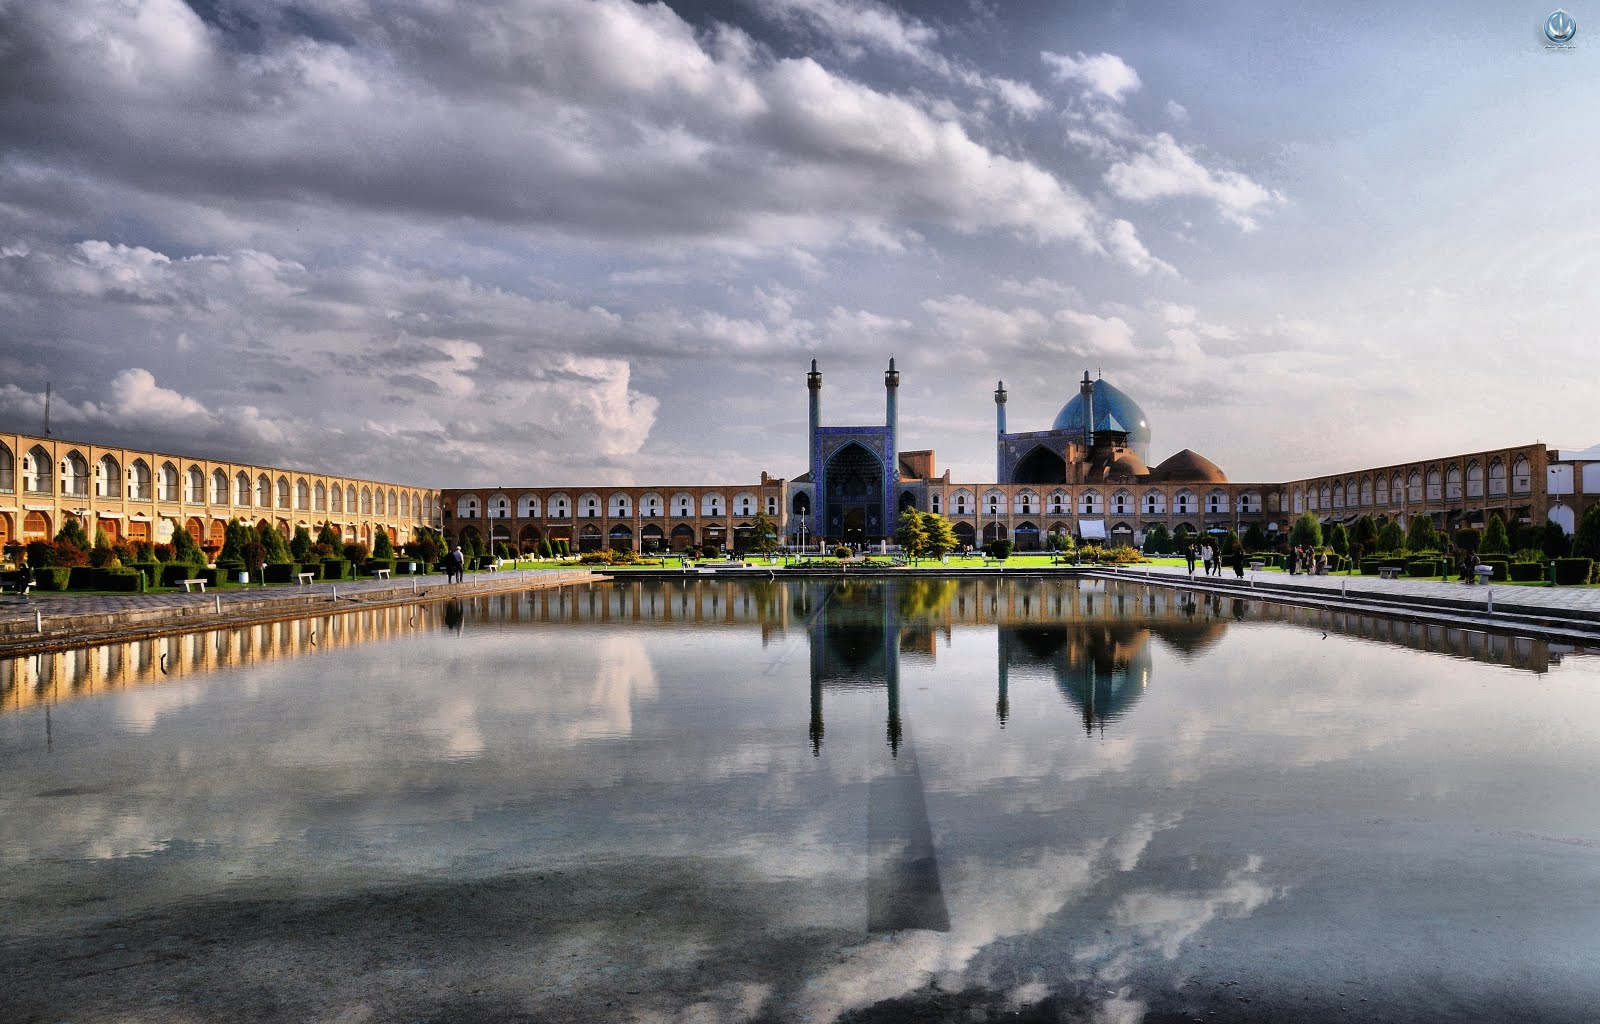 Day 13: Esfahan